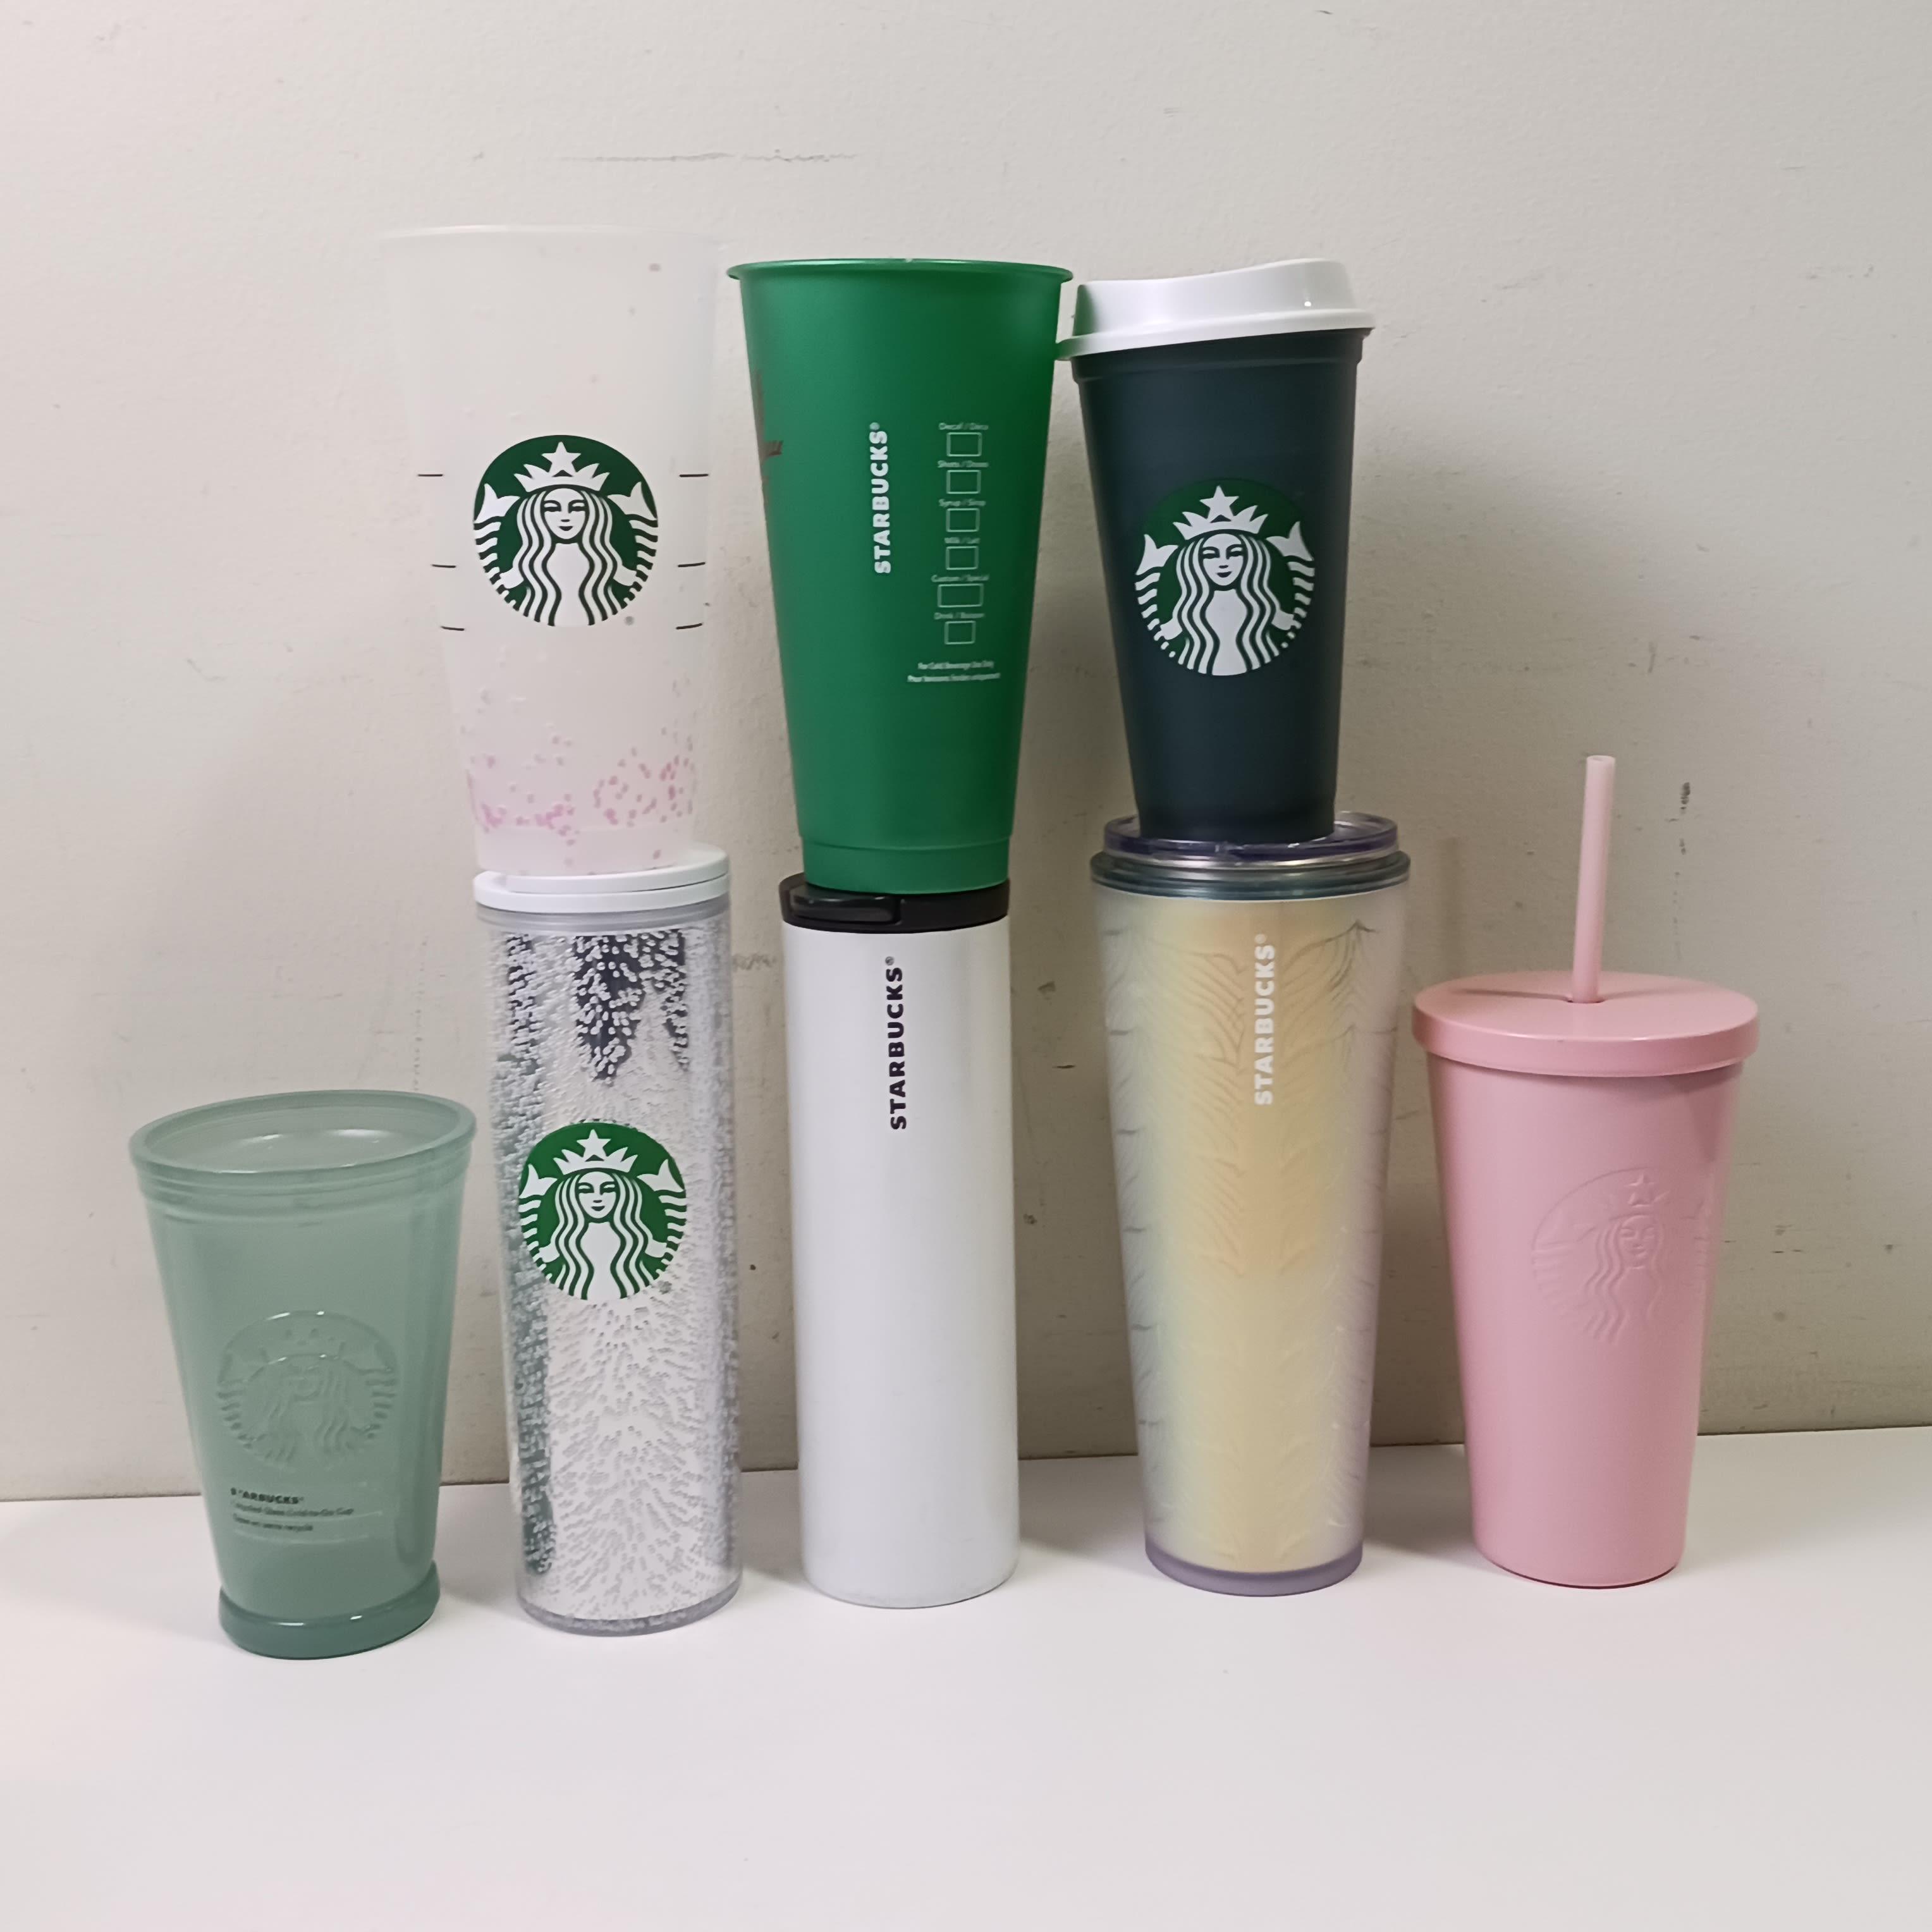 Starbucks & Ban.do Launch New Fall Cups & Merchandise